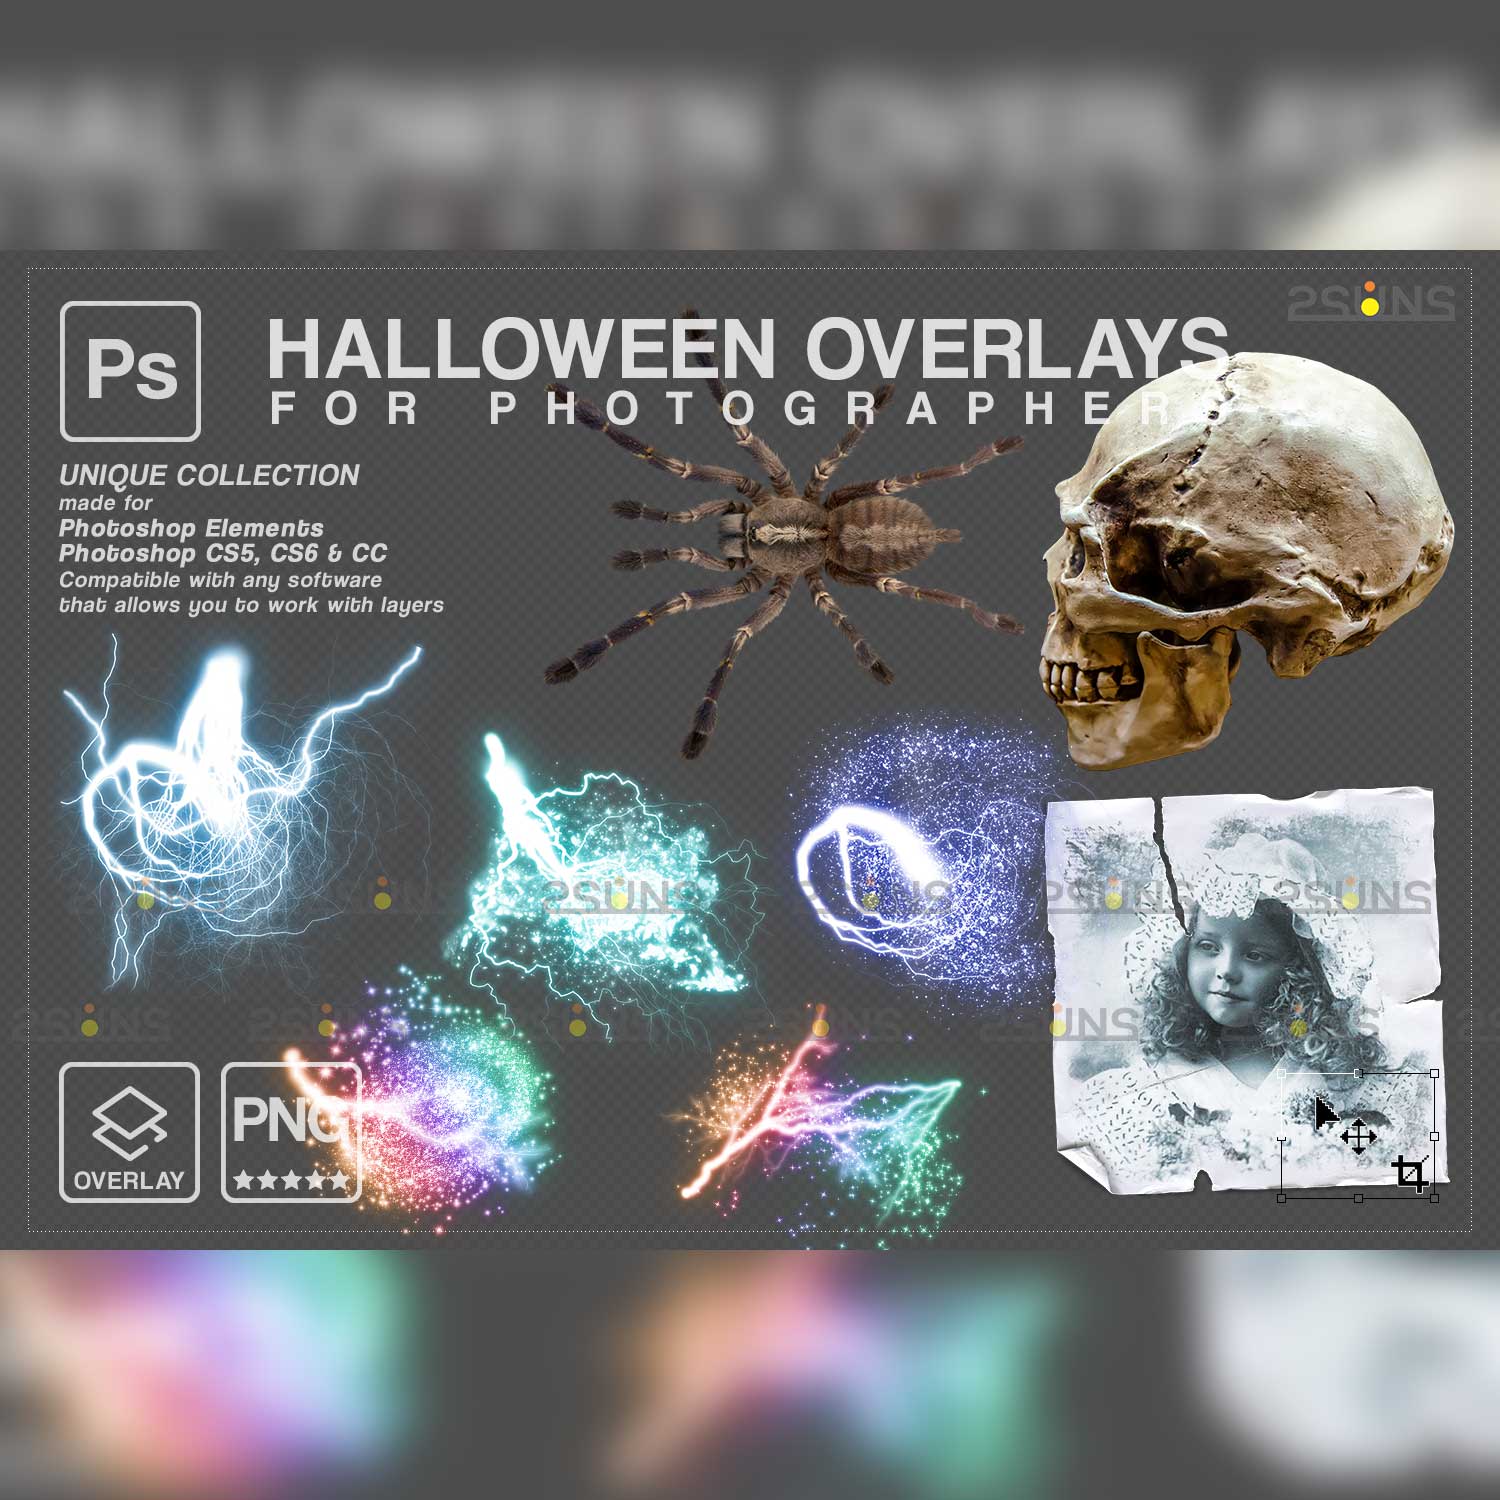 Halloween Photoshop Overlays cover image.